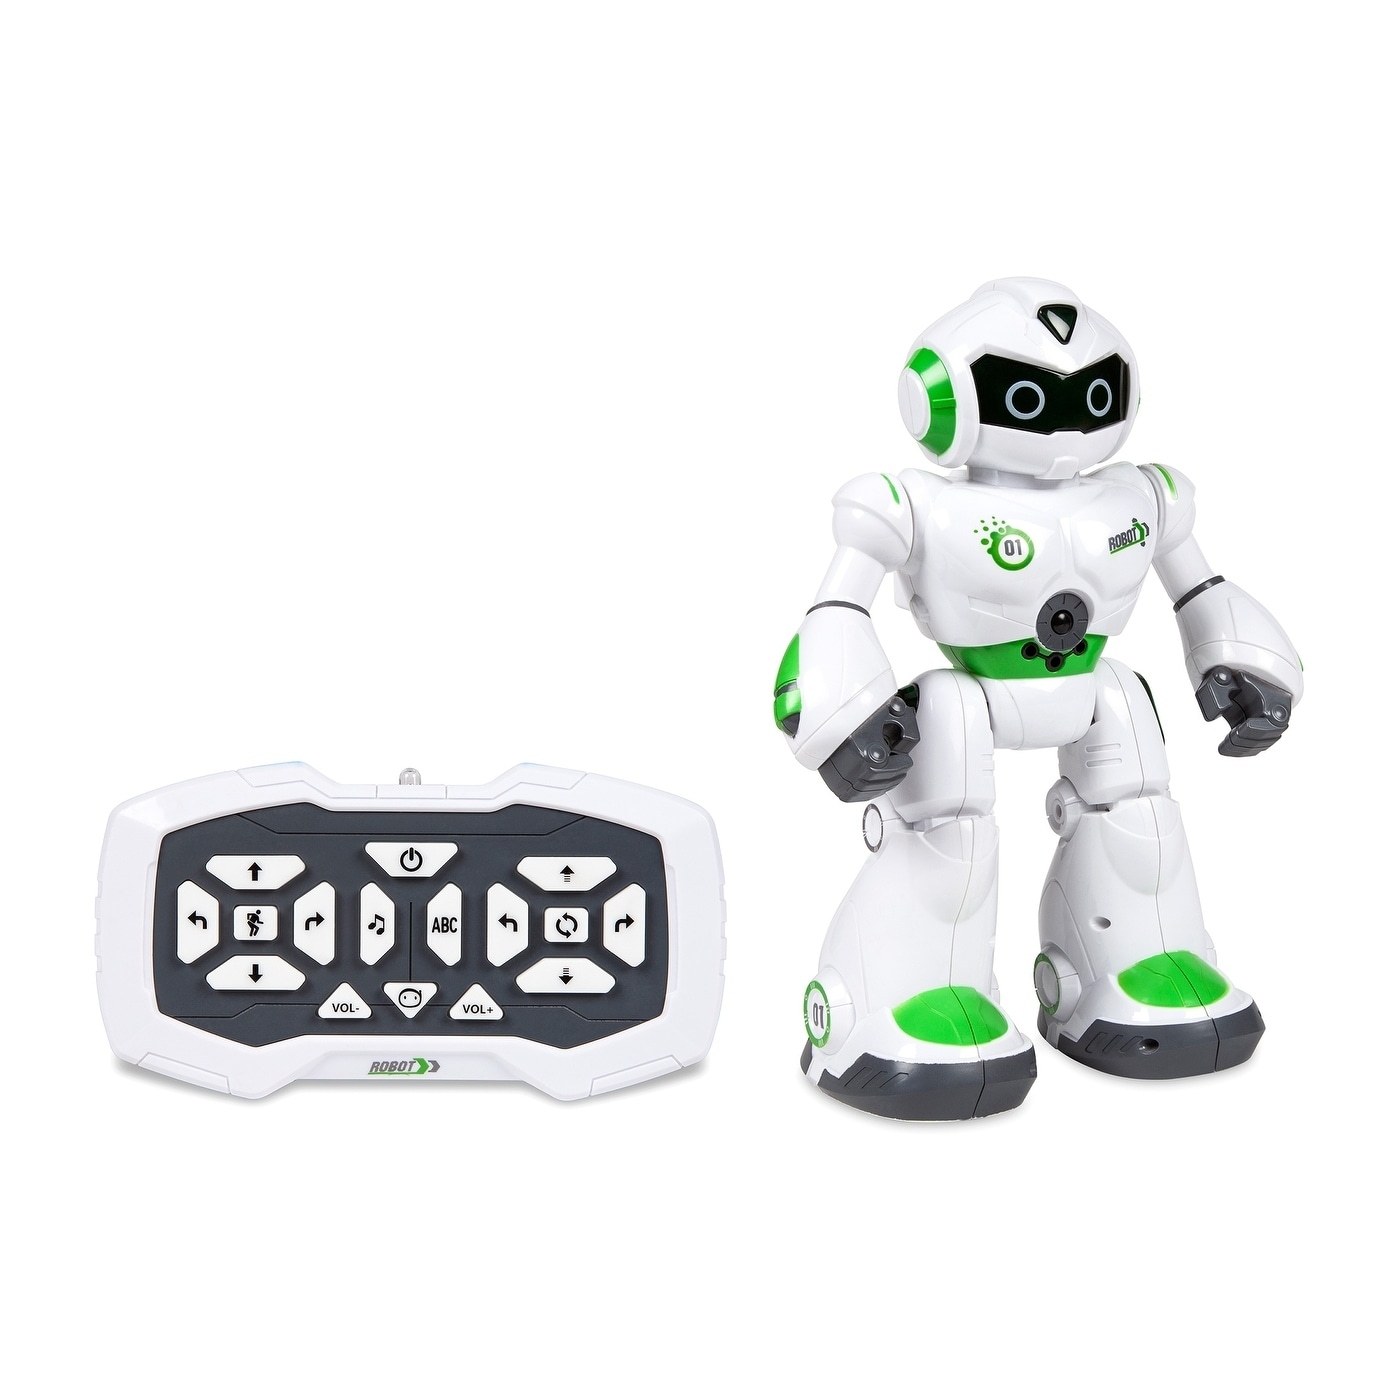 robot robot remote control